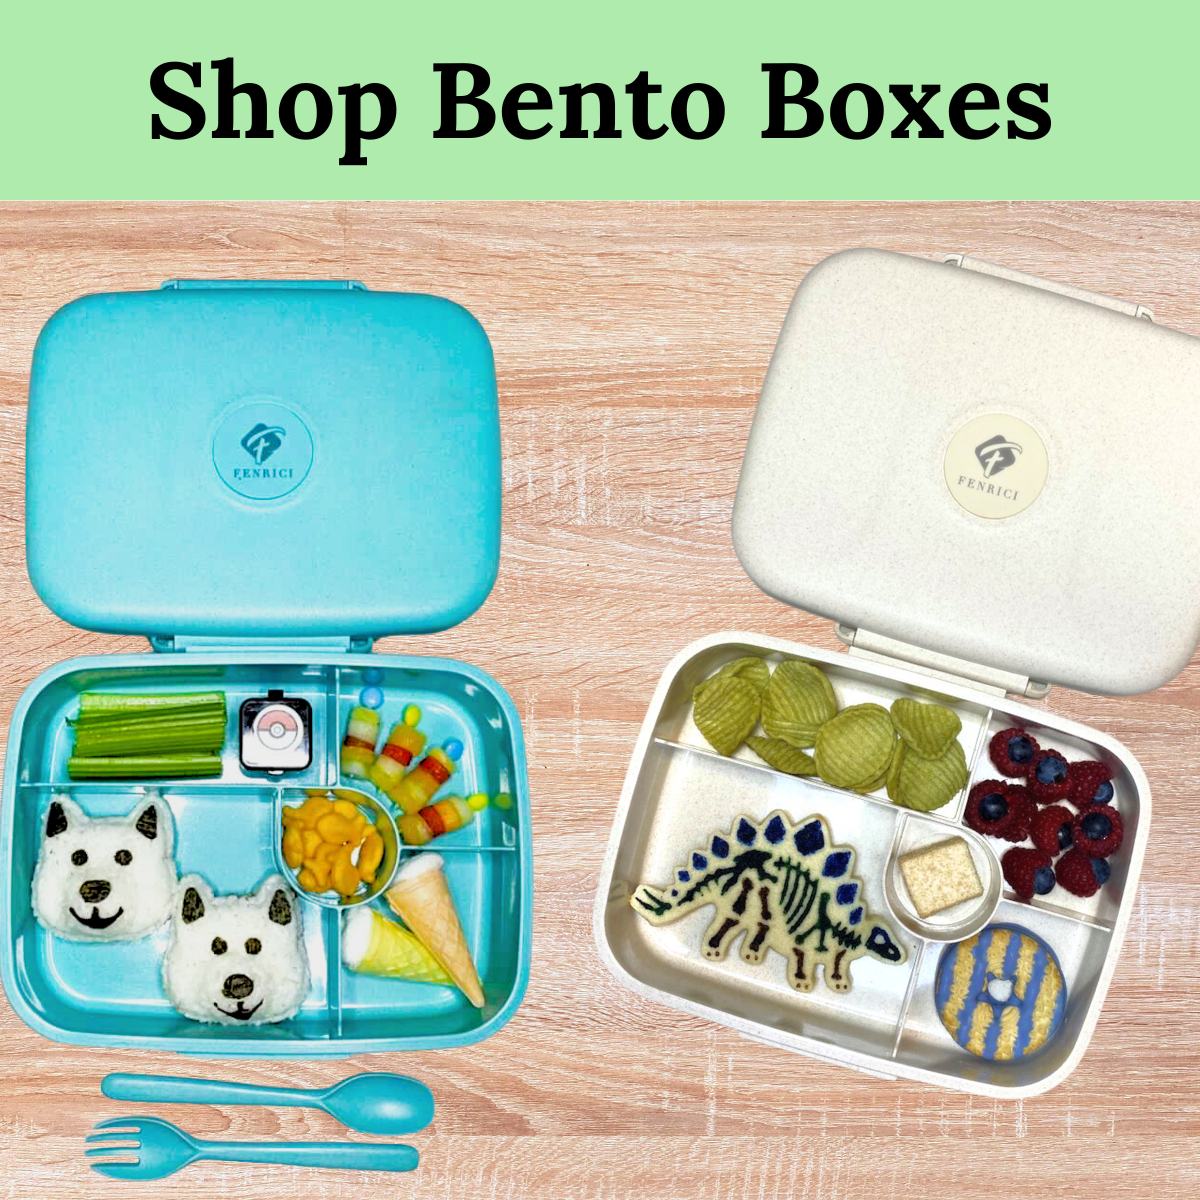 Bento Box for Kids, Fresh Green Lunch Box – Fenrici Brands